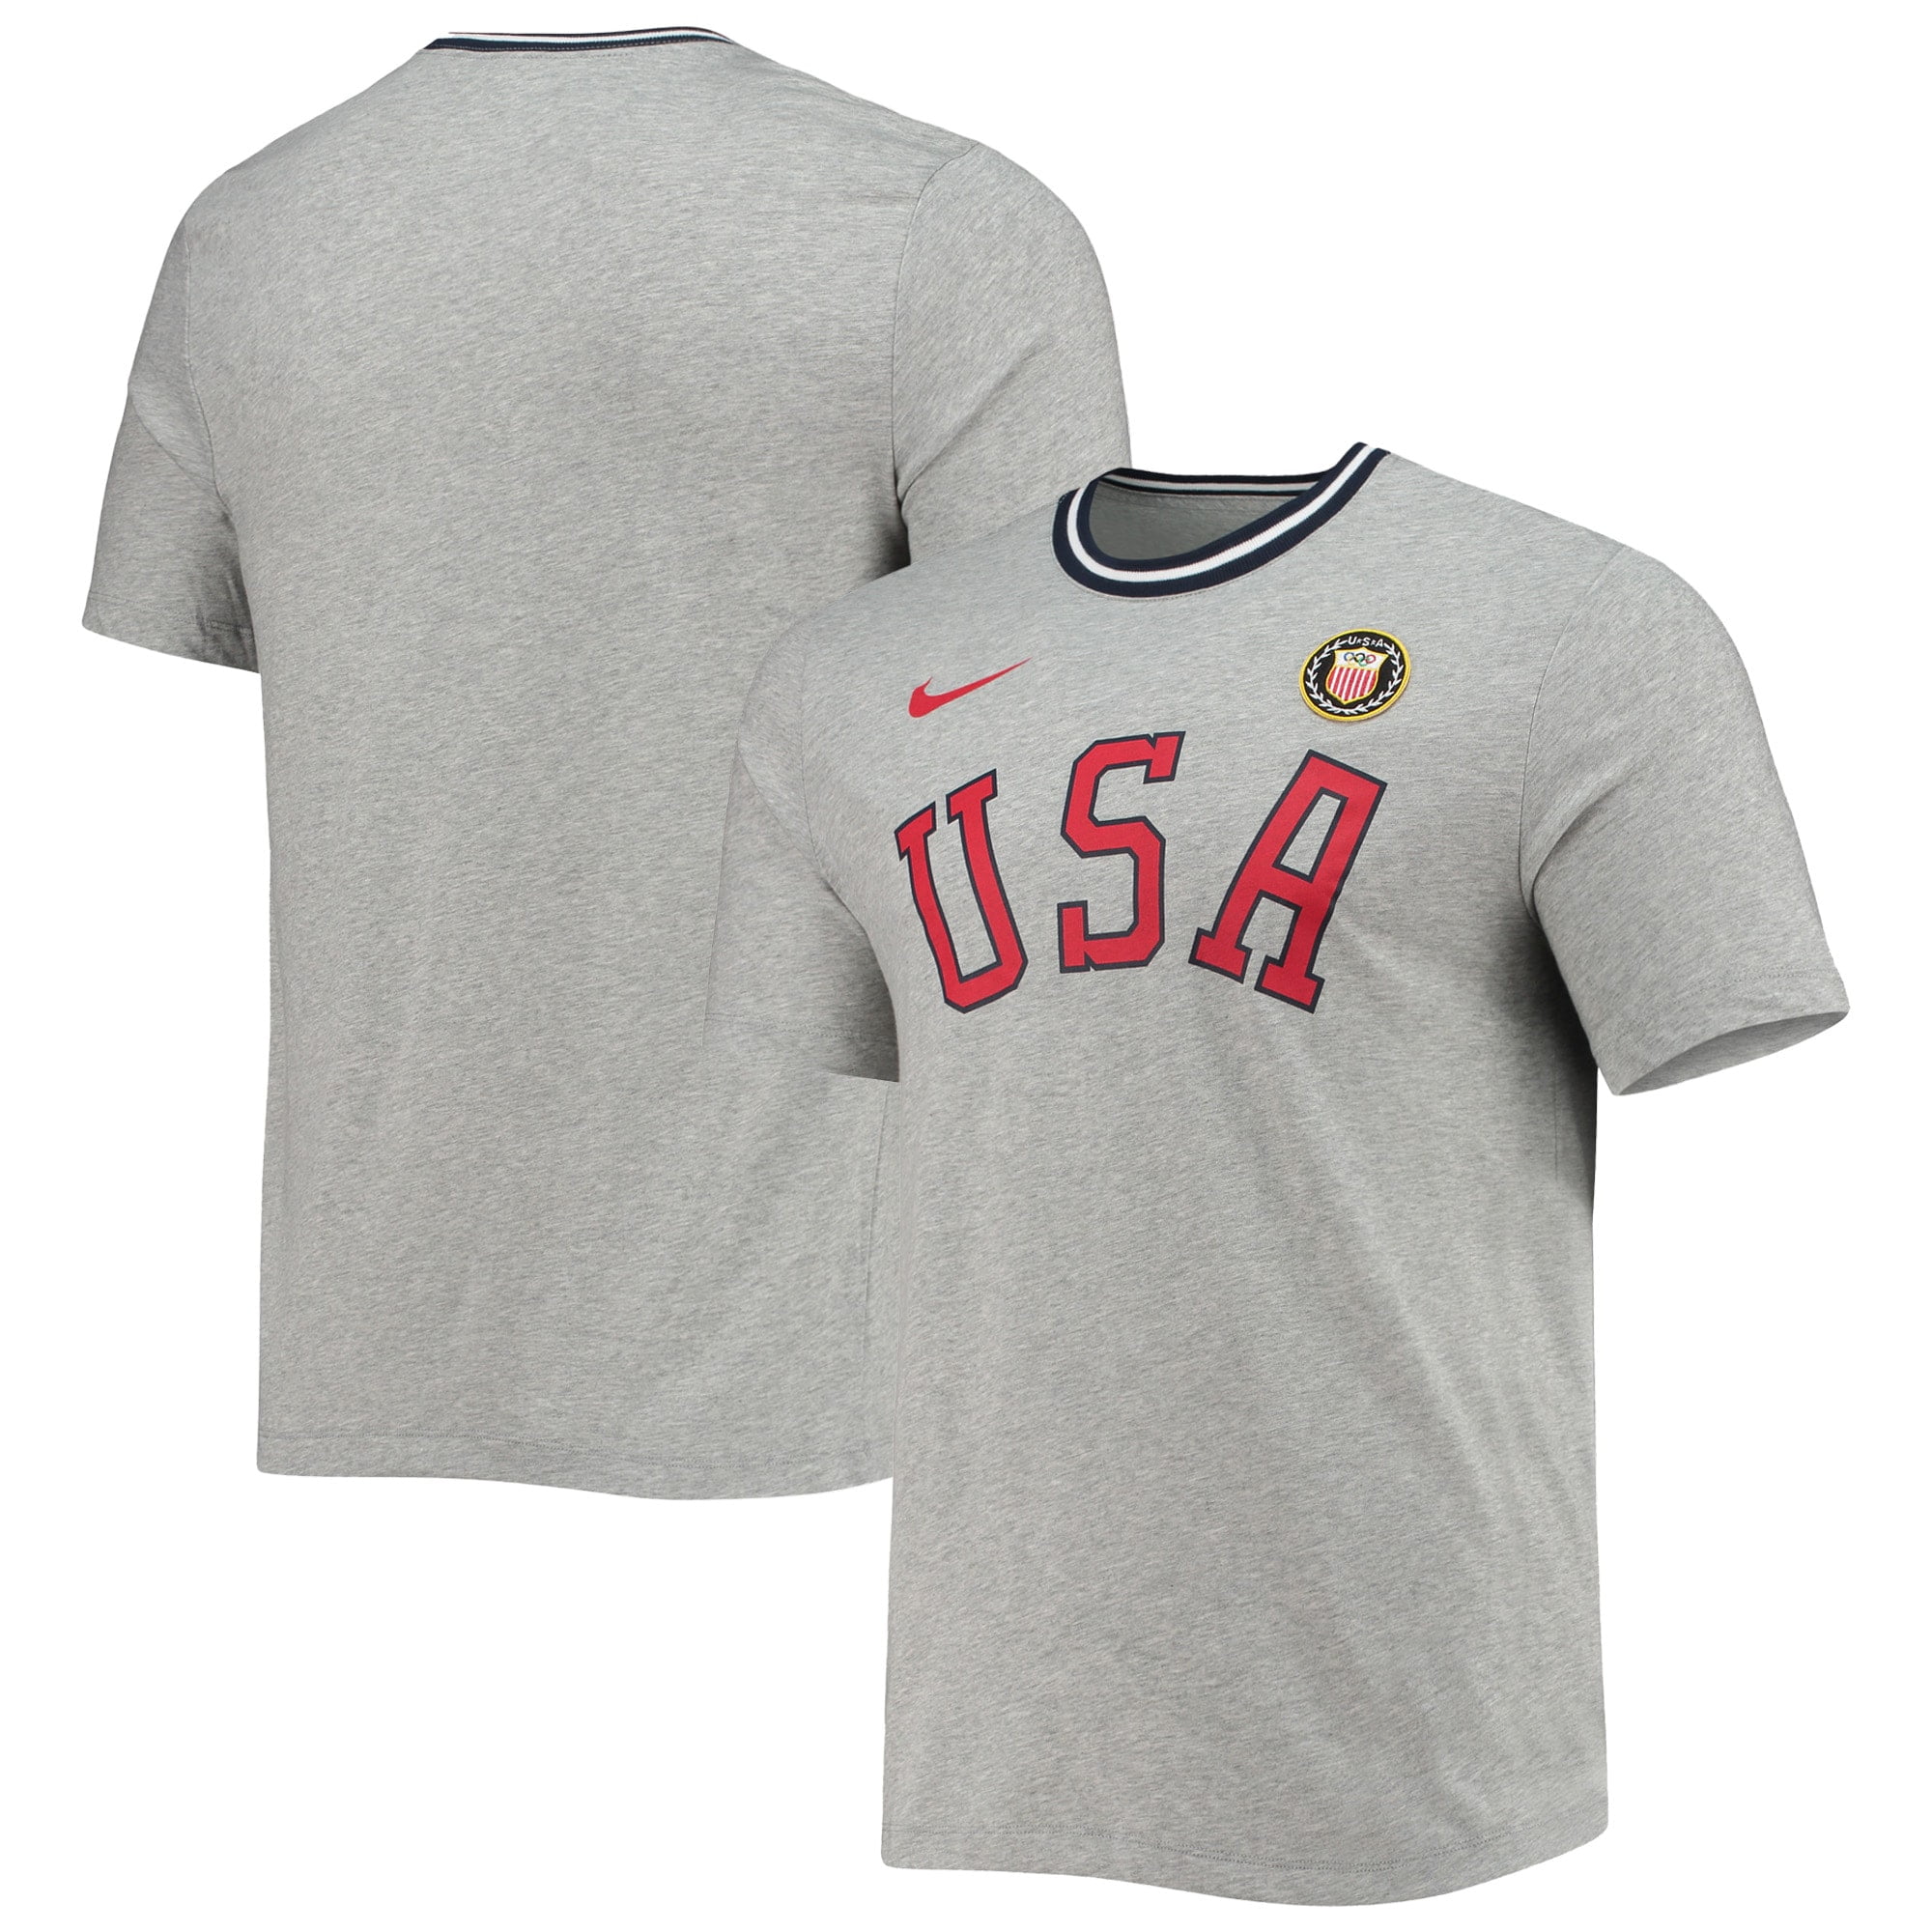 Team Nike Olympic Heritage T-Shirt - - Walmart.com